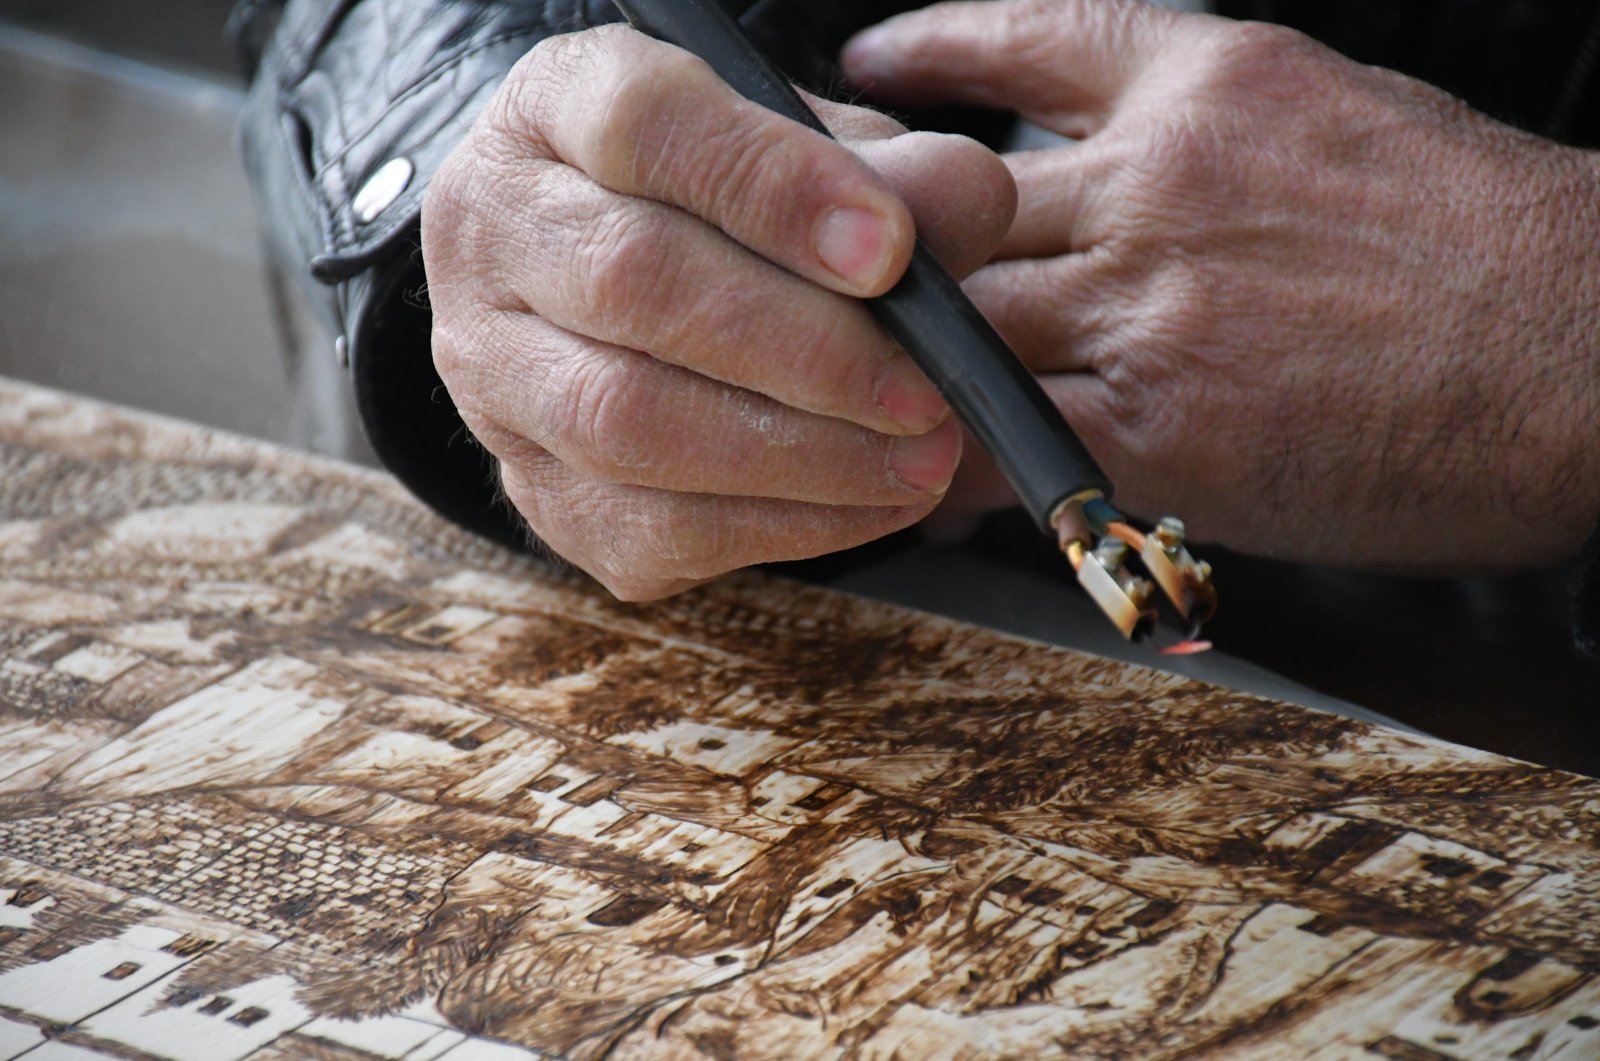 Yılmaz Öngün etching a piece at his workshop, Aksaray, central Turkey, Feb. 20, 2022. (IHA Photo)